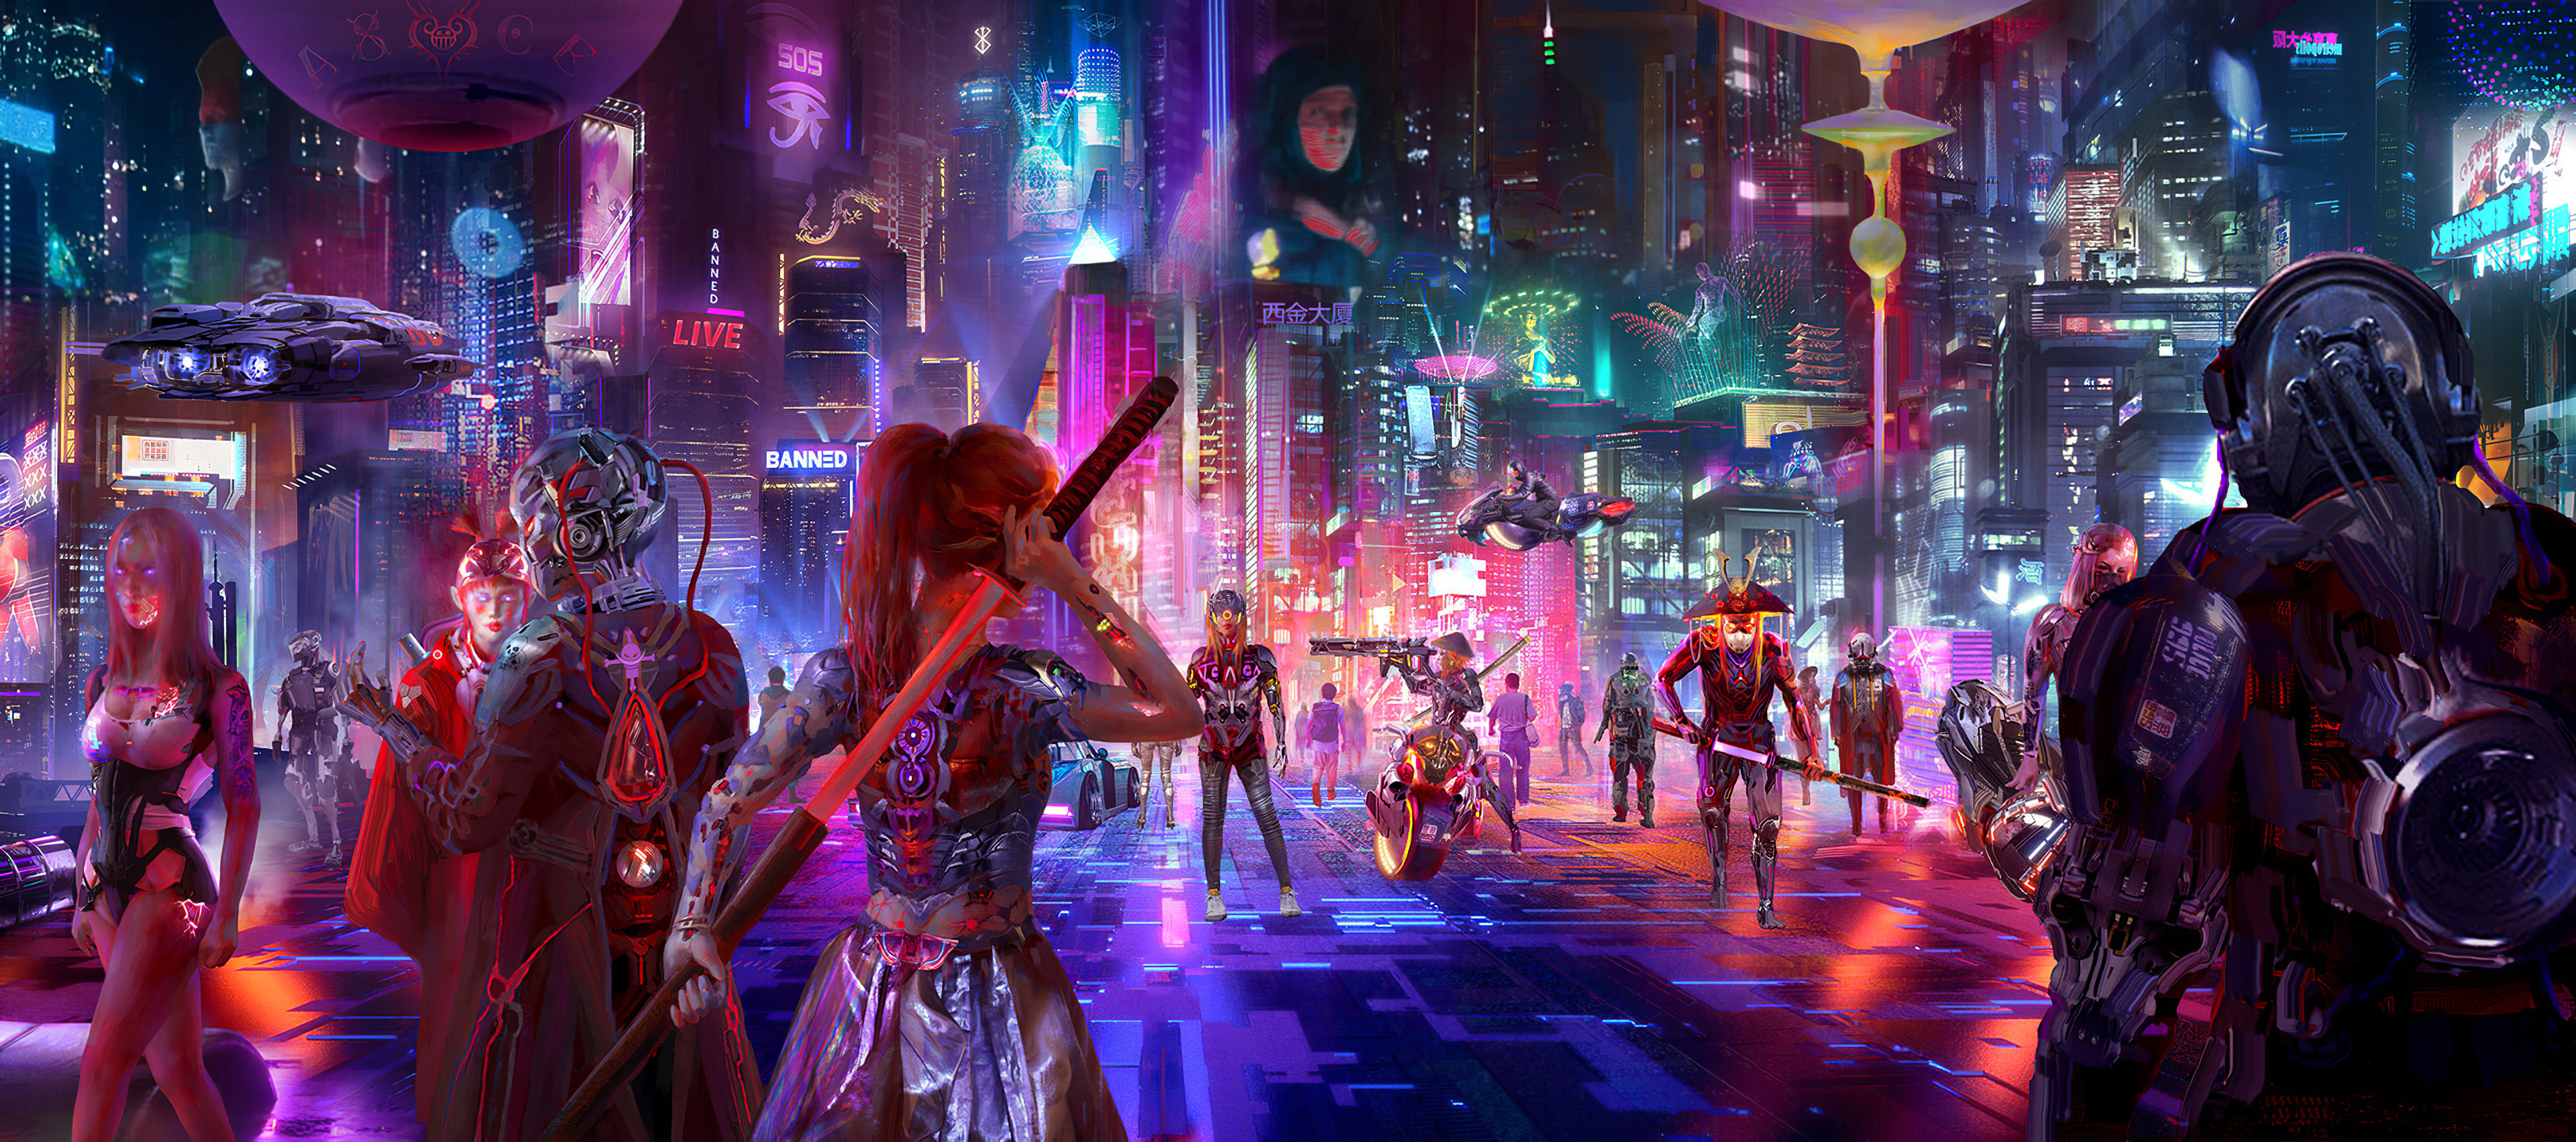 Cyberpunk City Of Shadow 4K Wallpaper,Hd Artist Wallpapers,4K